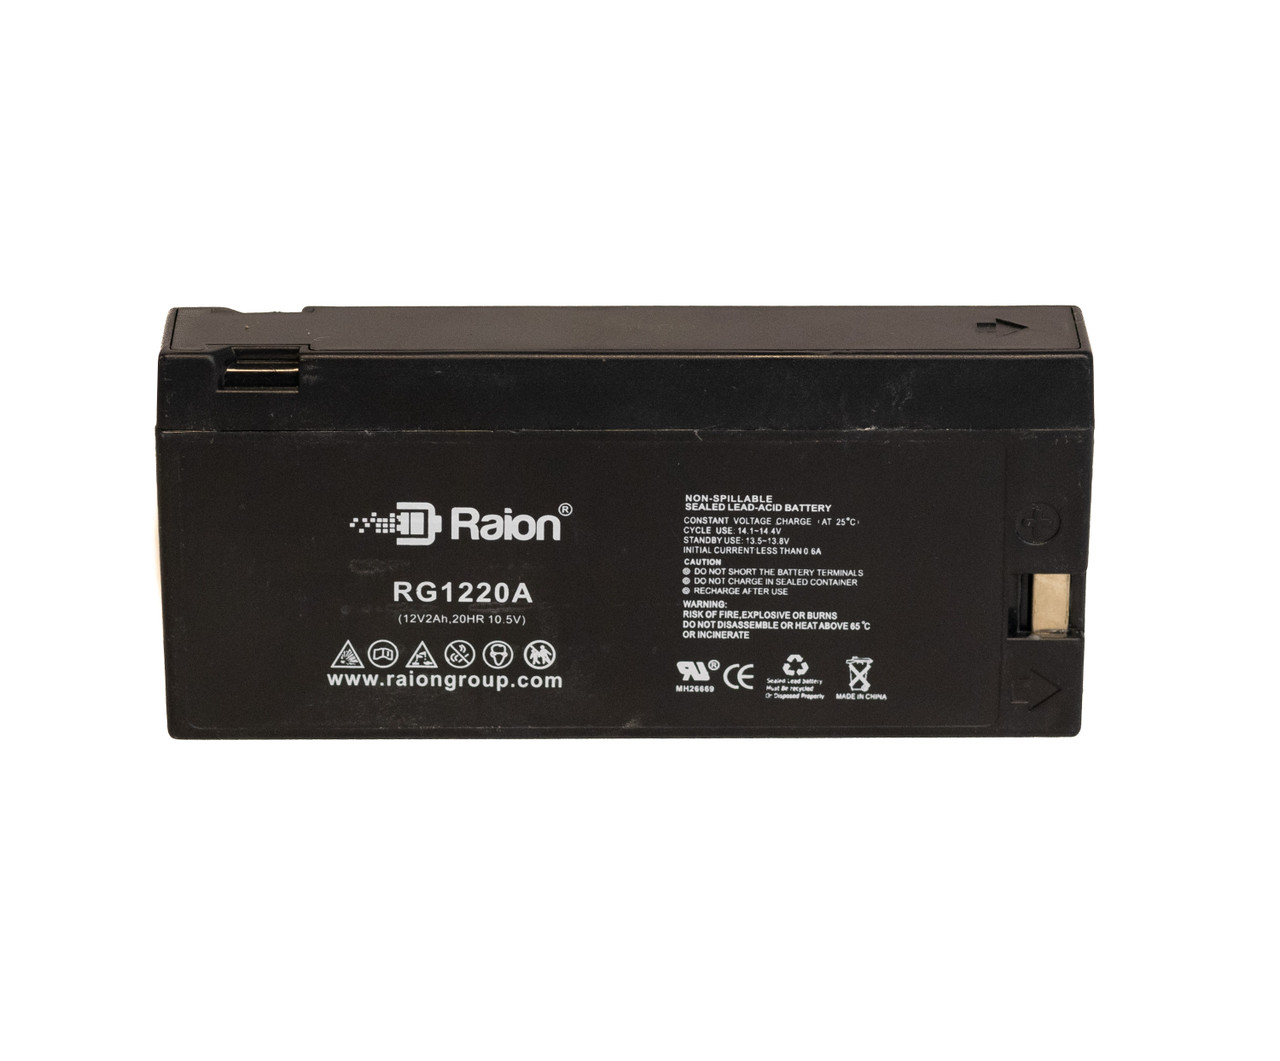 Raion Power RG1220A SLA Battery for Panasonic AG-195